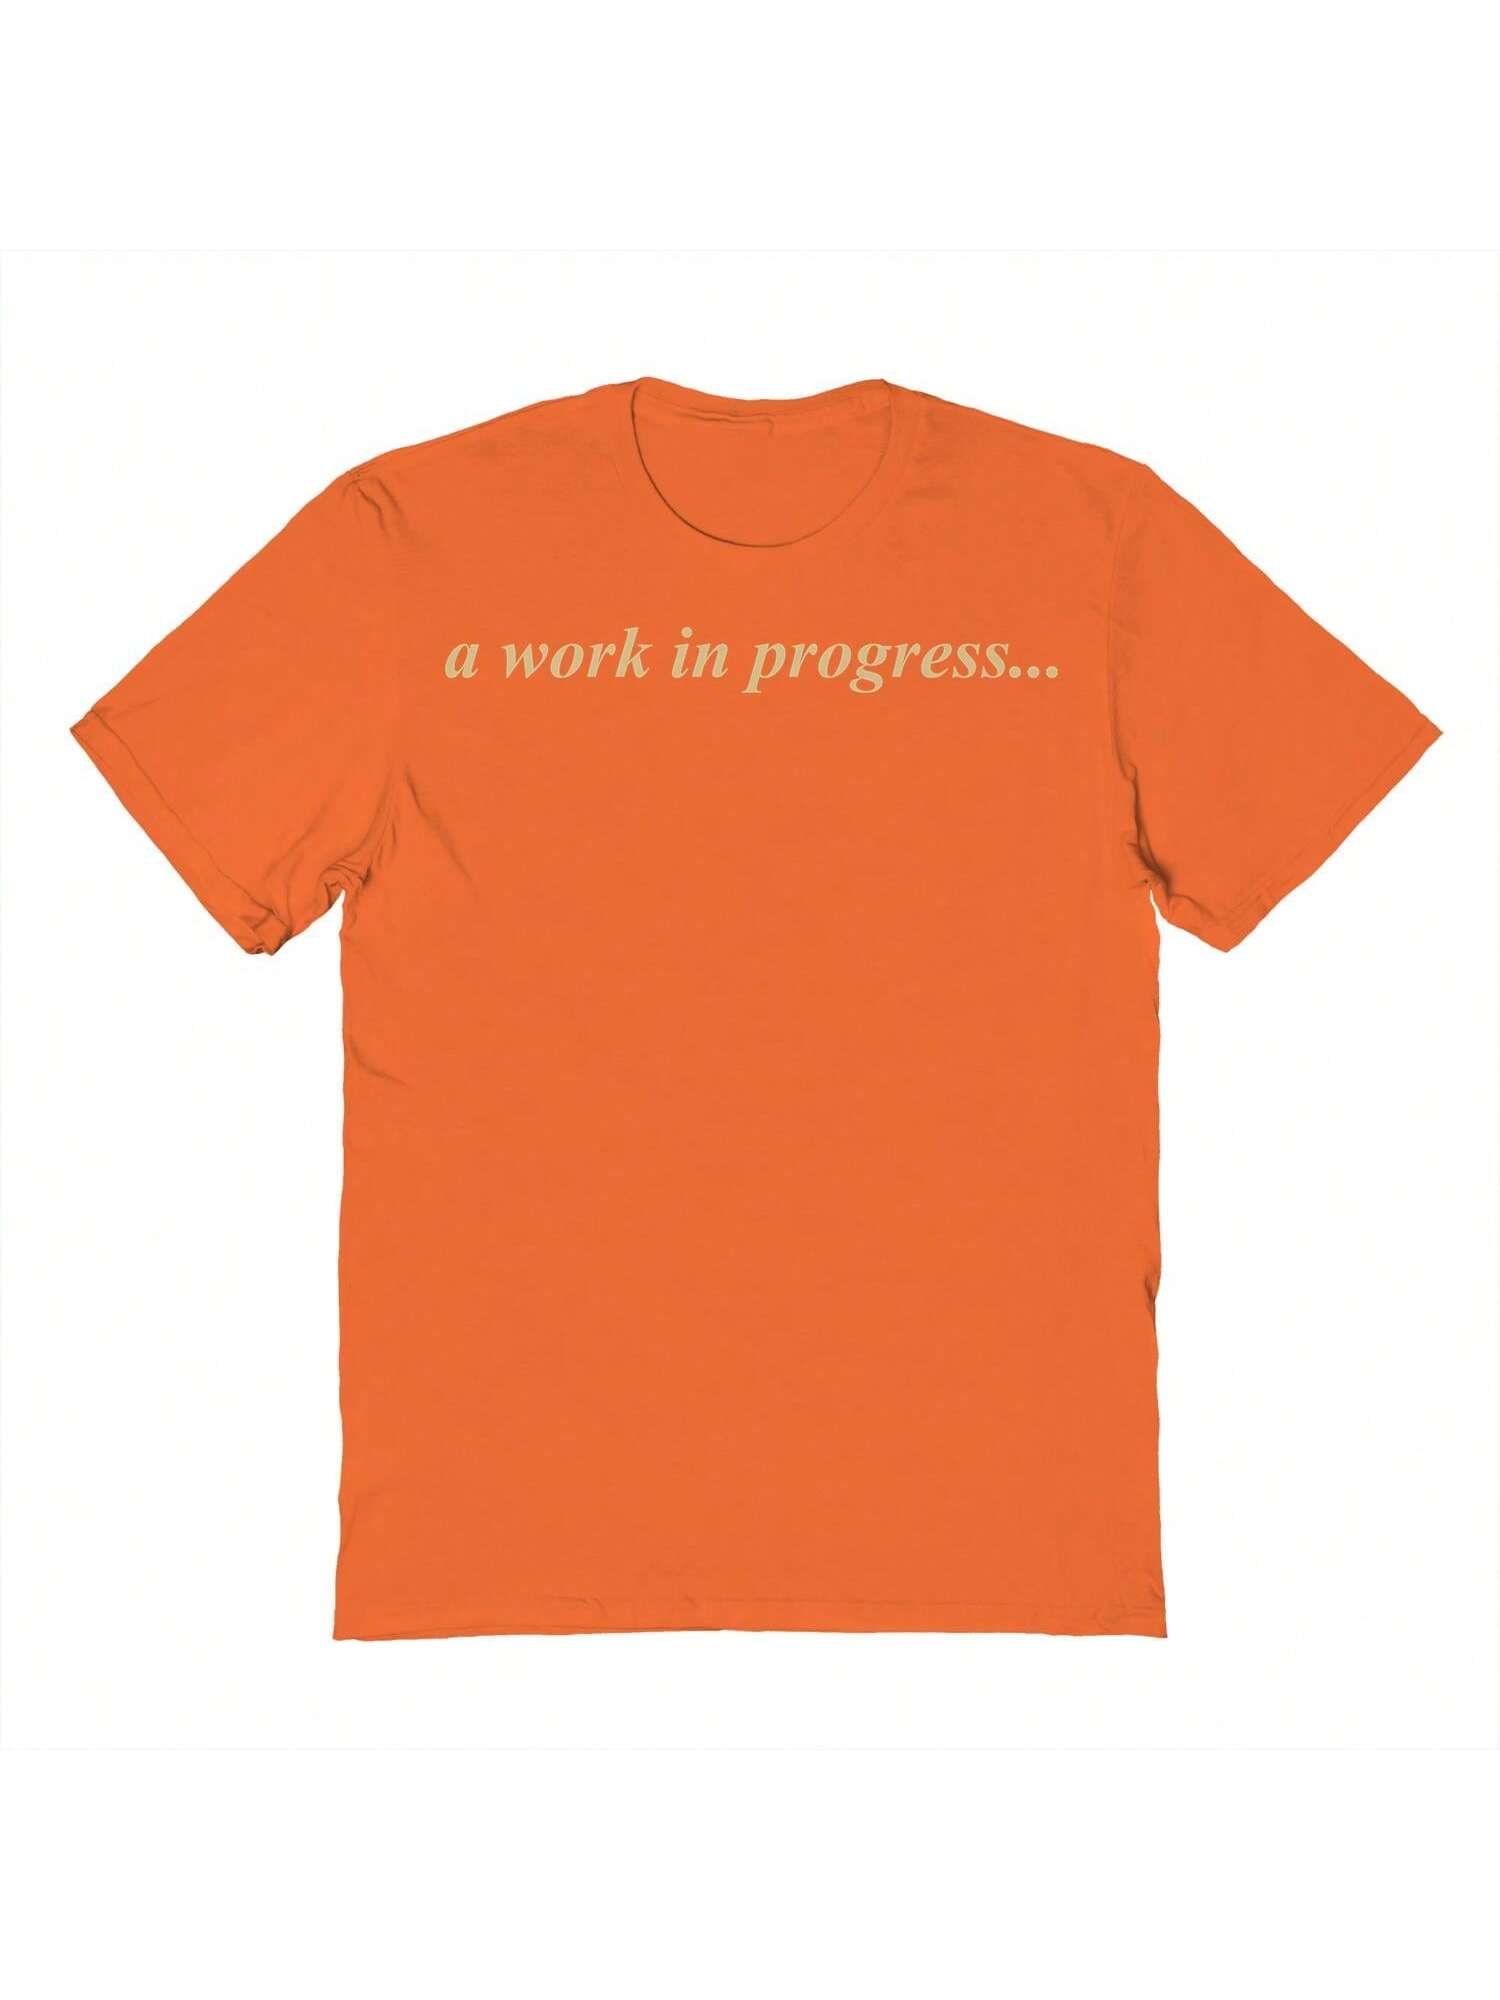 Хлопковая футболка унисекс с короткими рукавами Nearly There WIP с графикой, апельсин